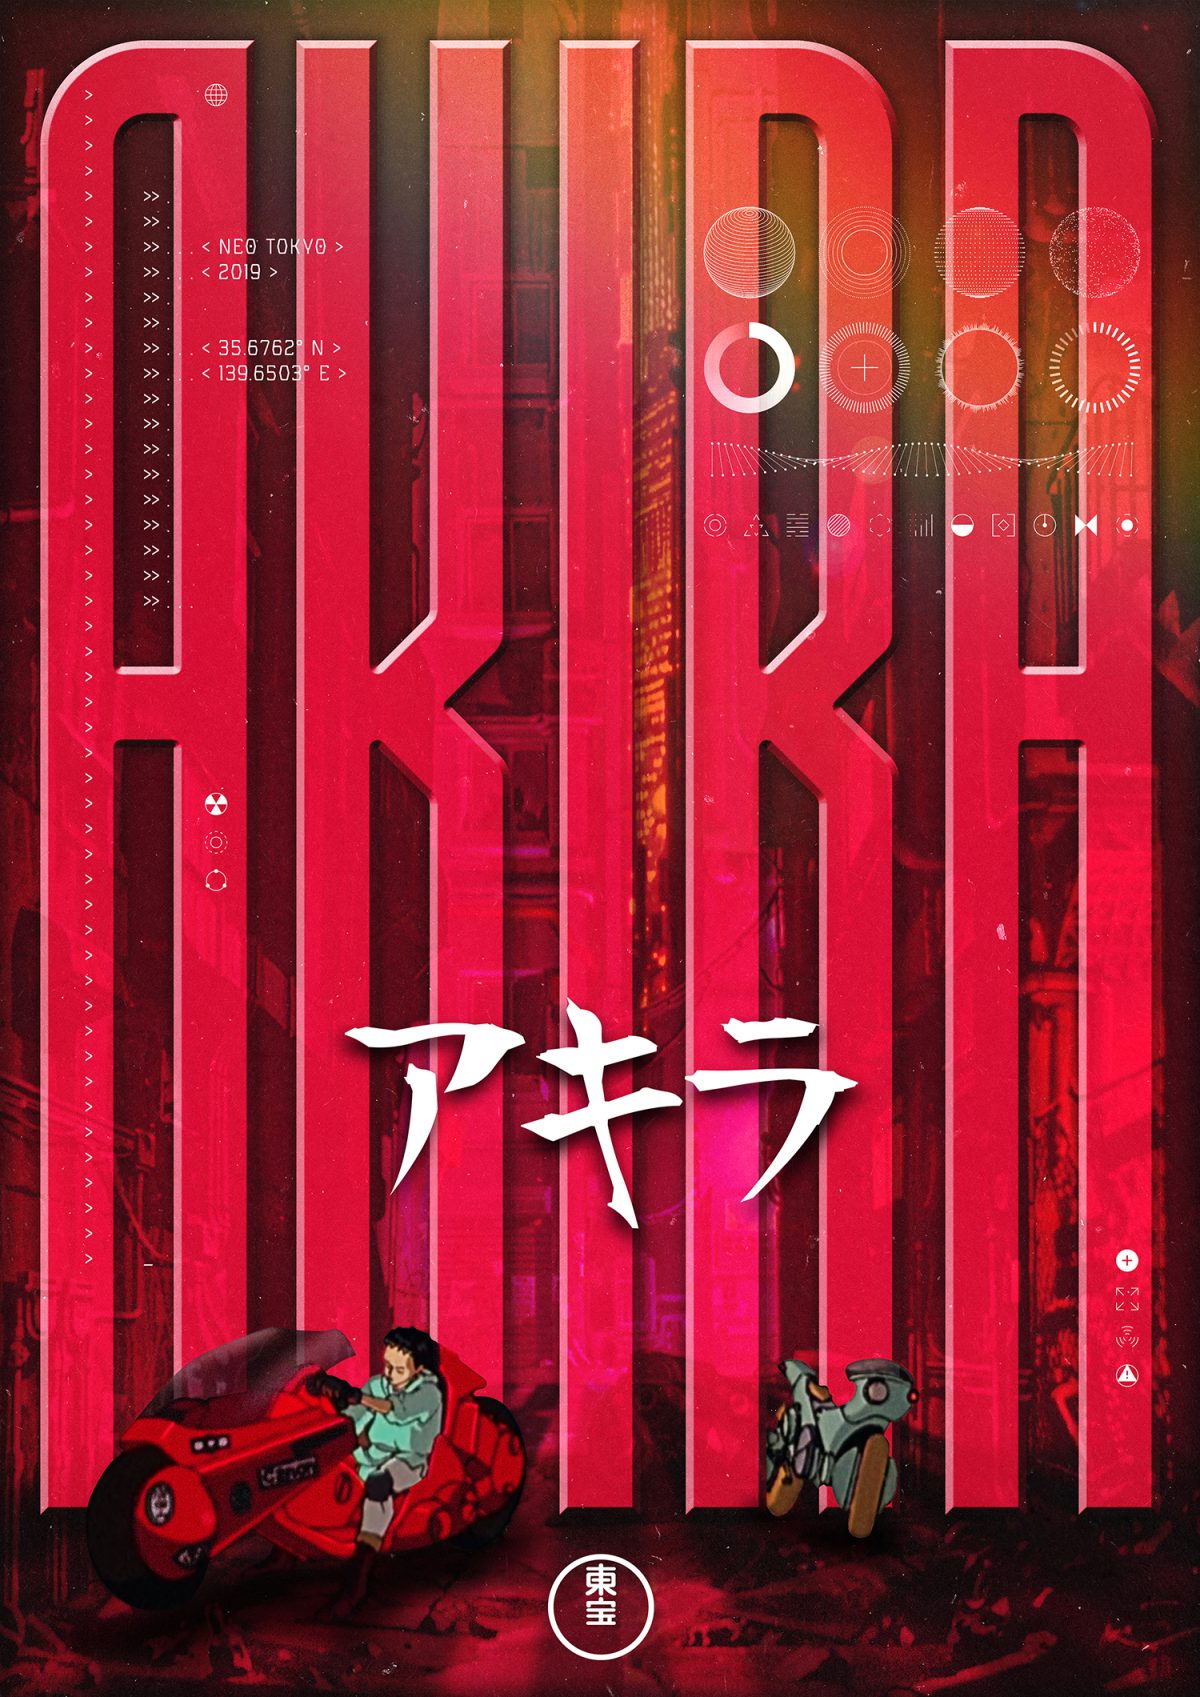 AKIRA (アキラ) - PosterSpy